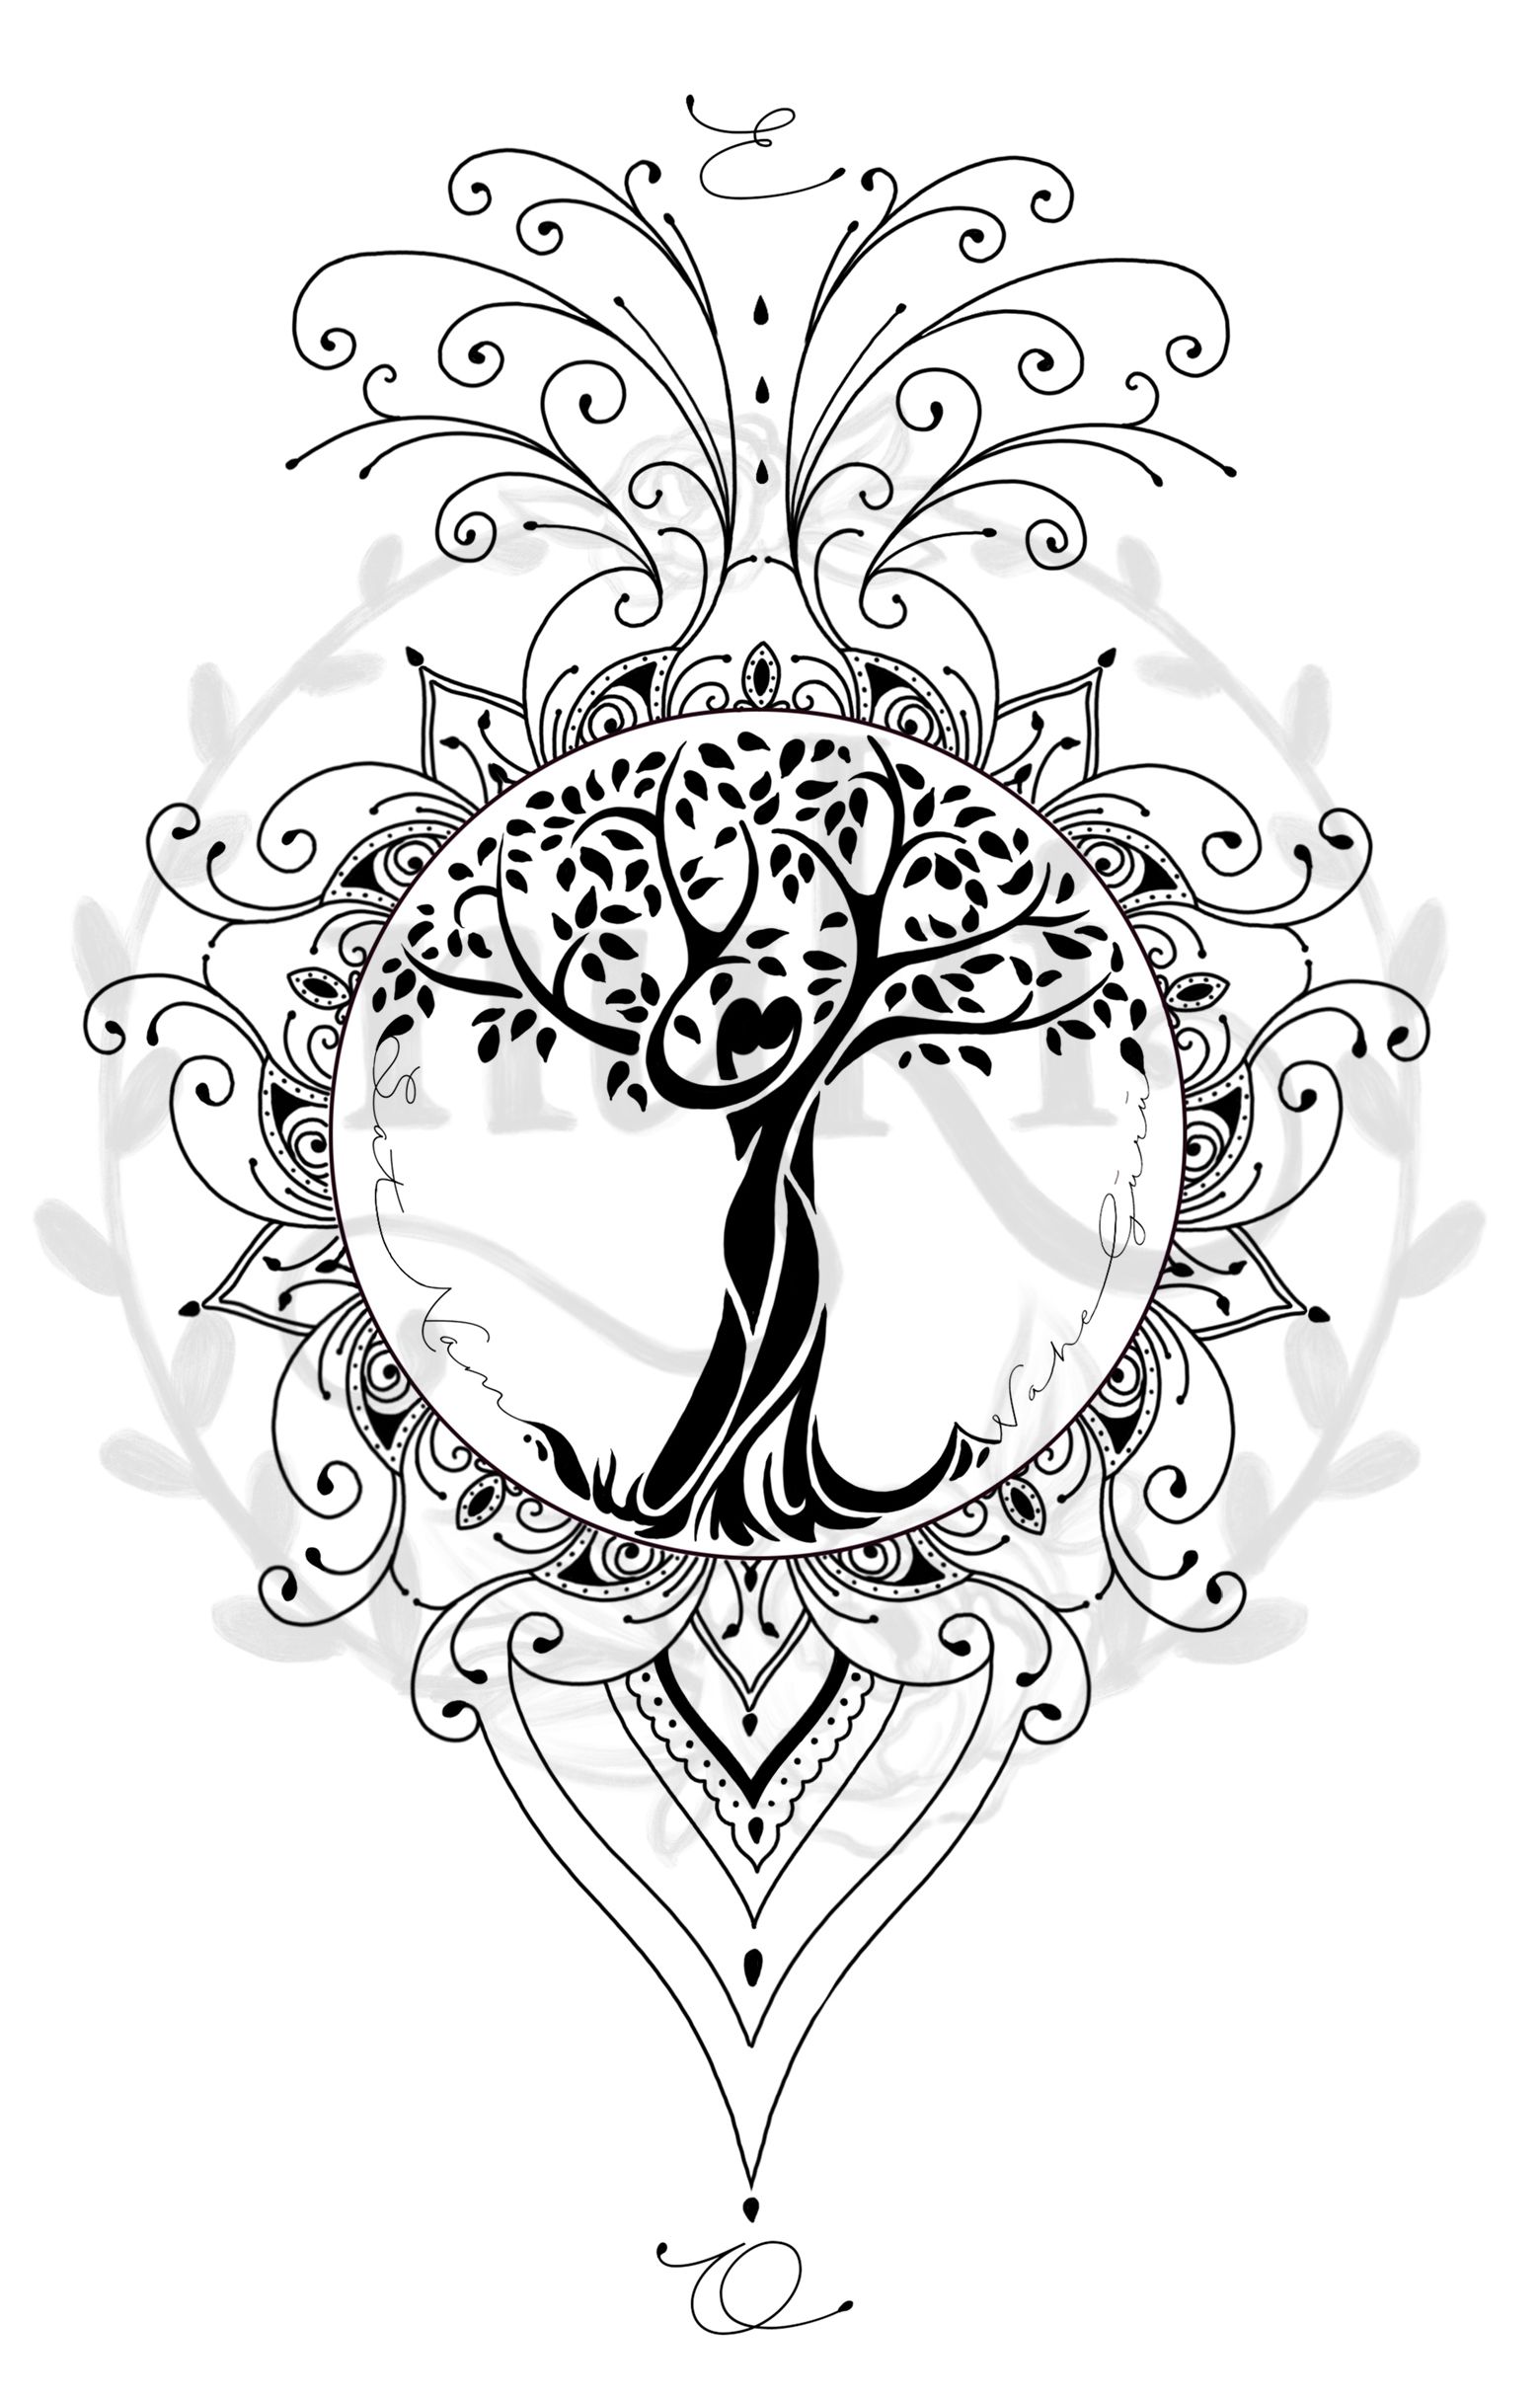 UPDATED] 40 Celtic Tree of Life Tattoos